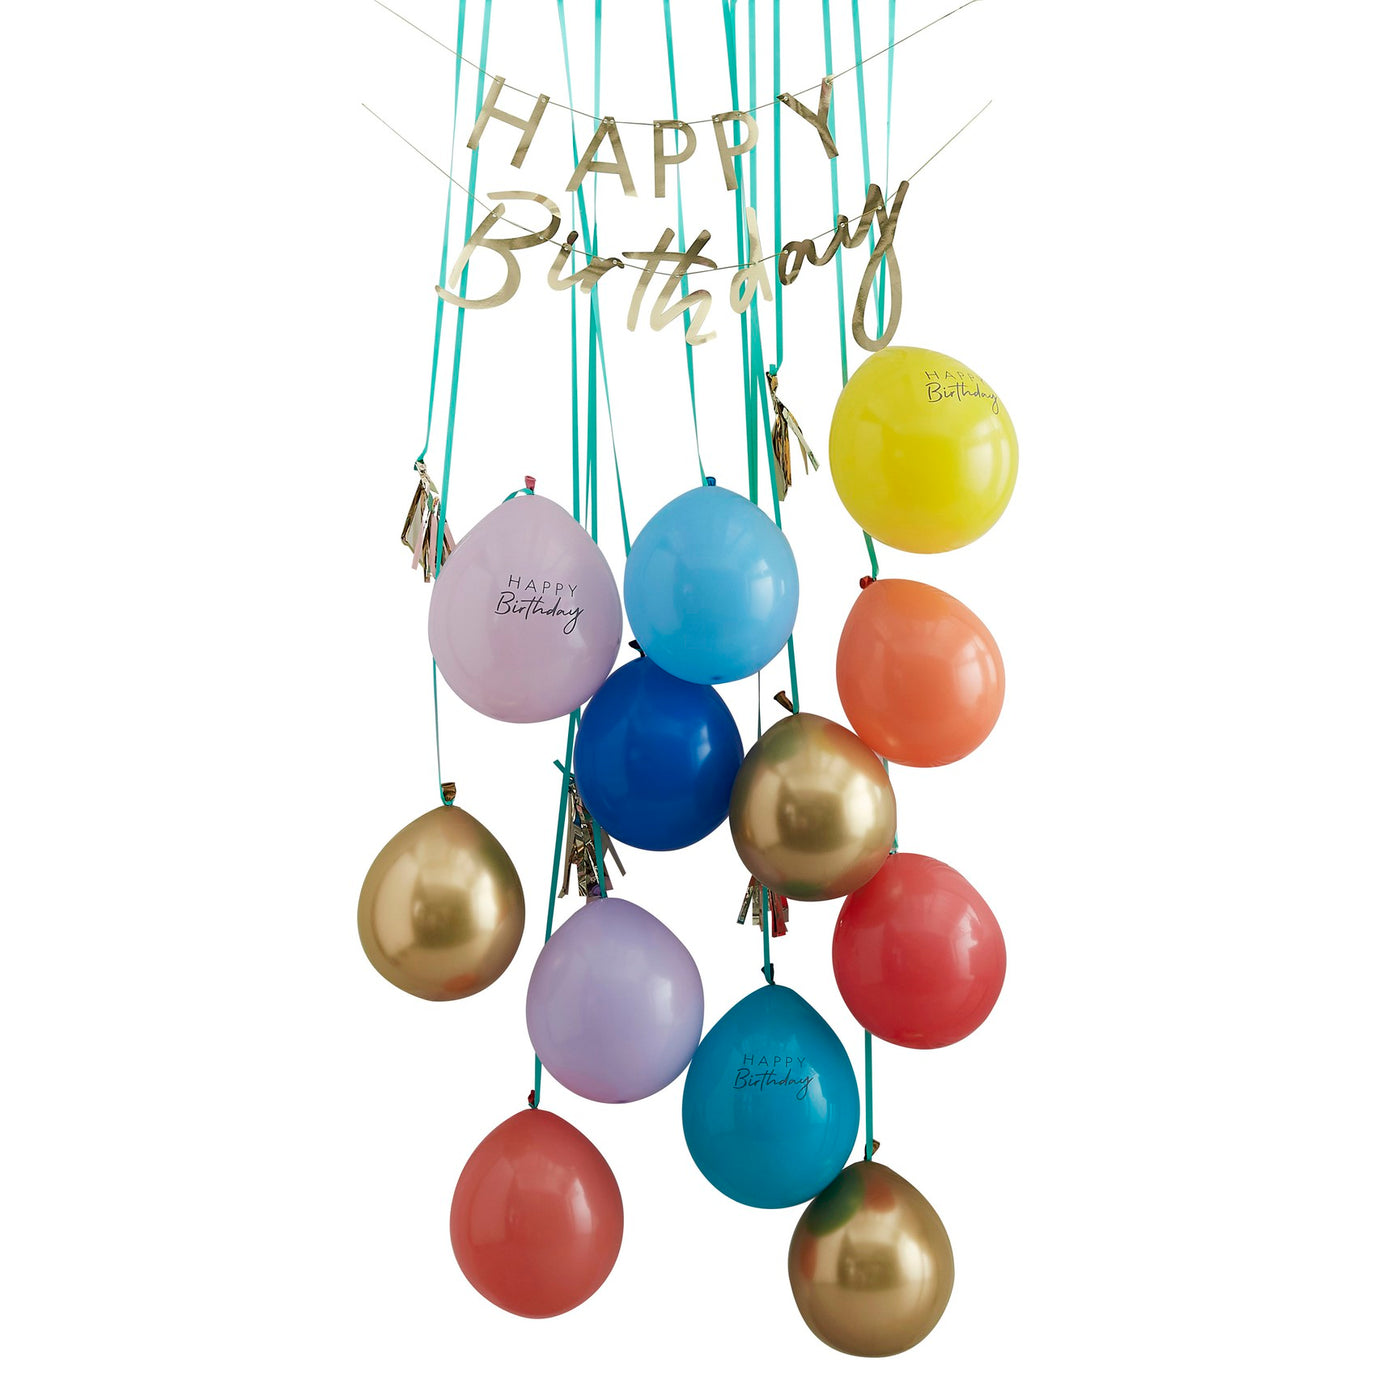 Türdeko Kit: Happy Birthday Girlande, Tassel in gold, 12 regenbogen Ballons, 15tlg